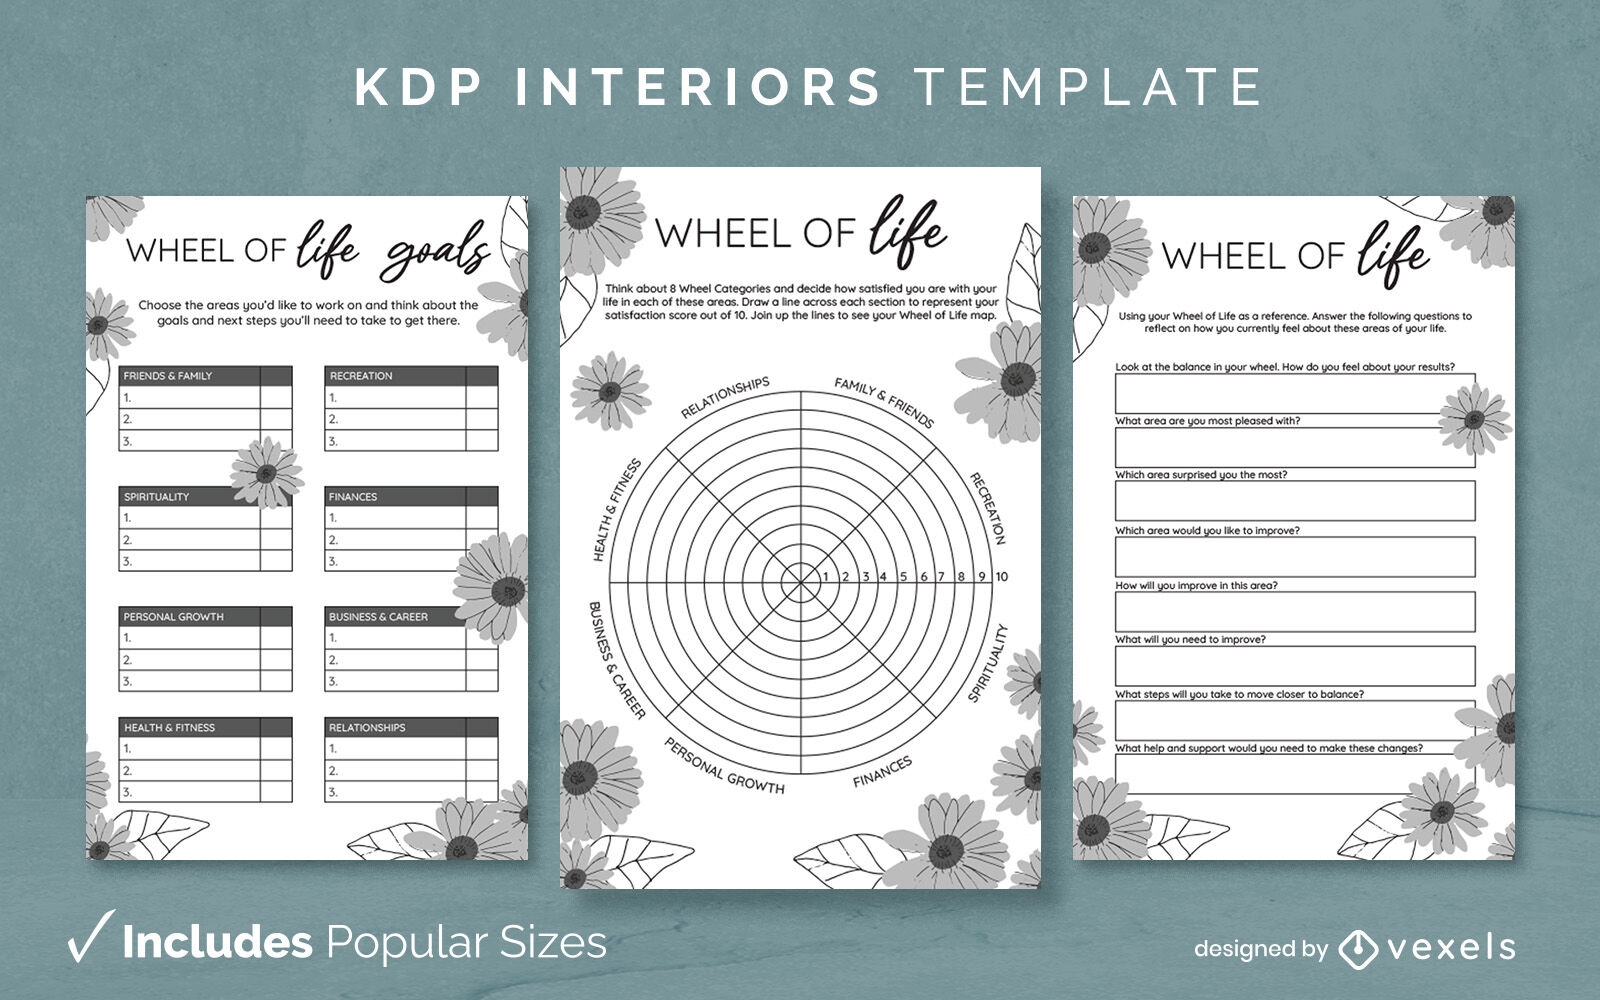 Wheel of life KDP interior template design